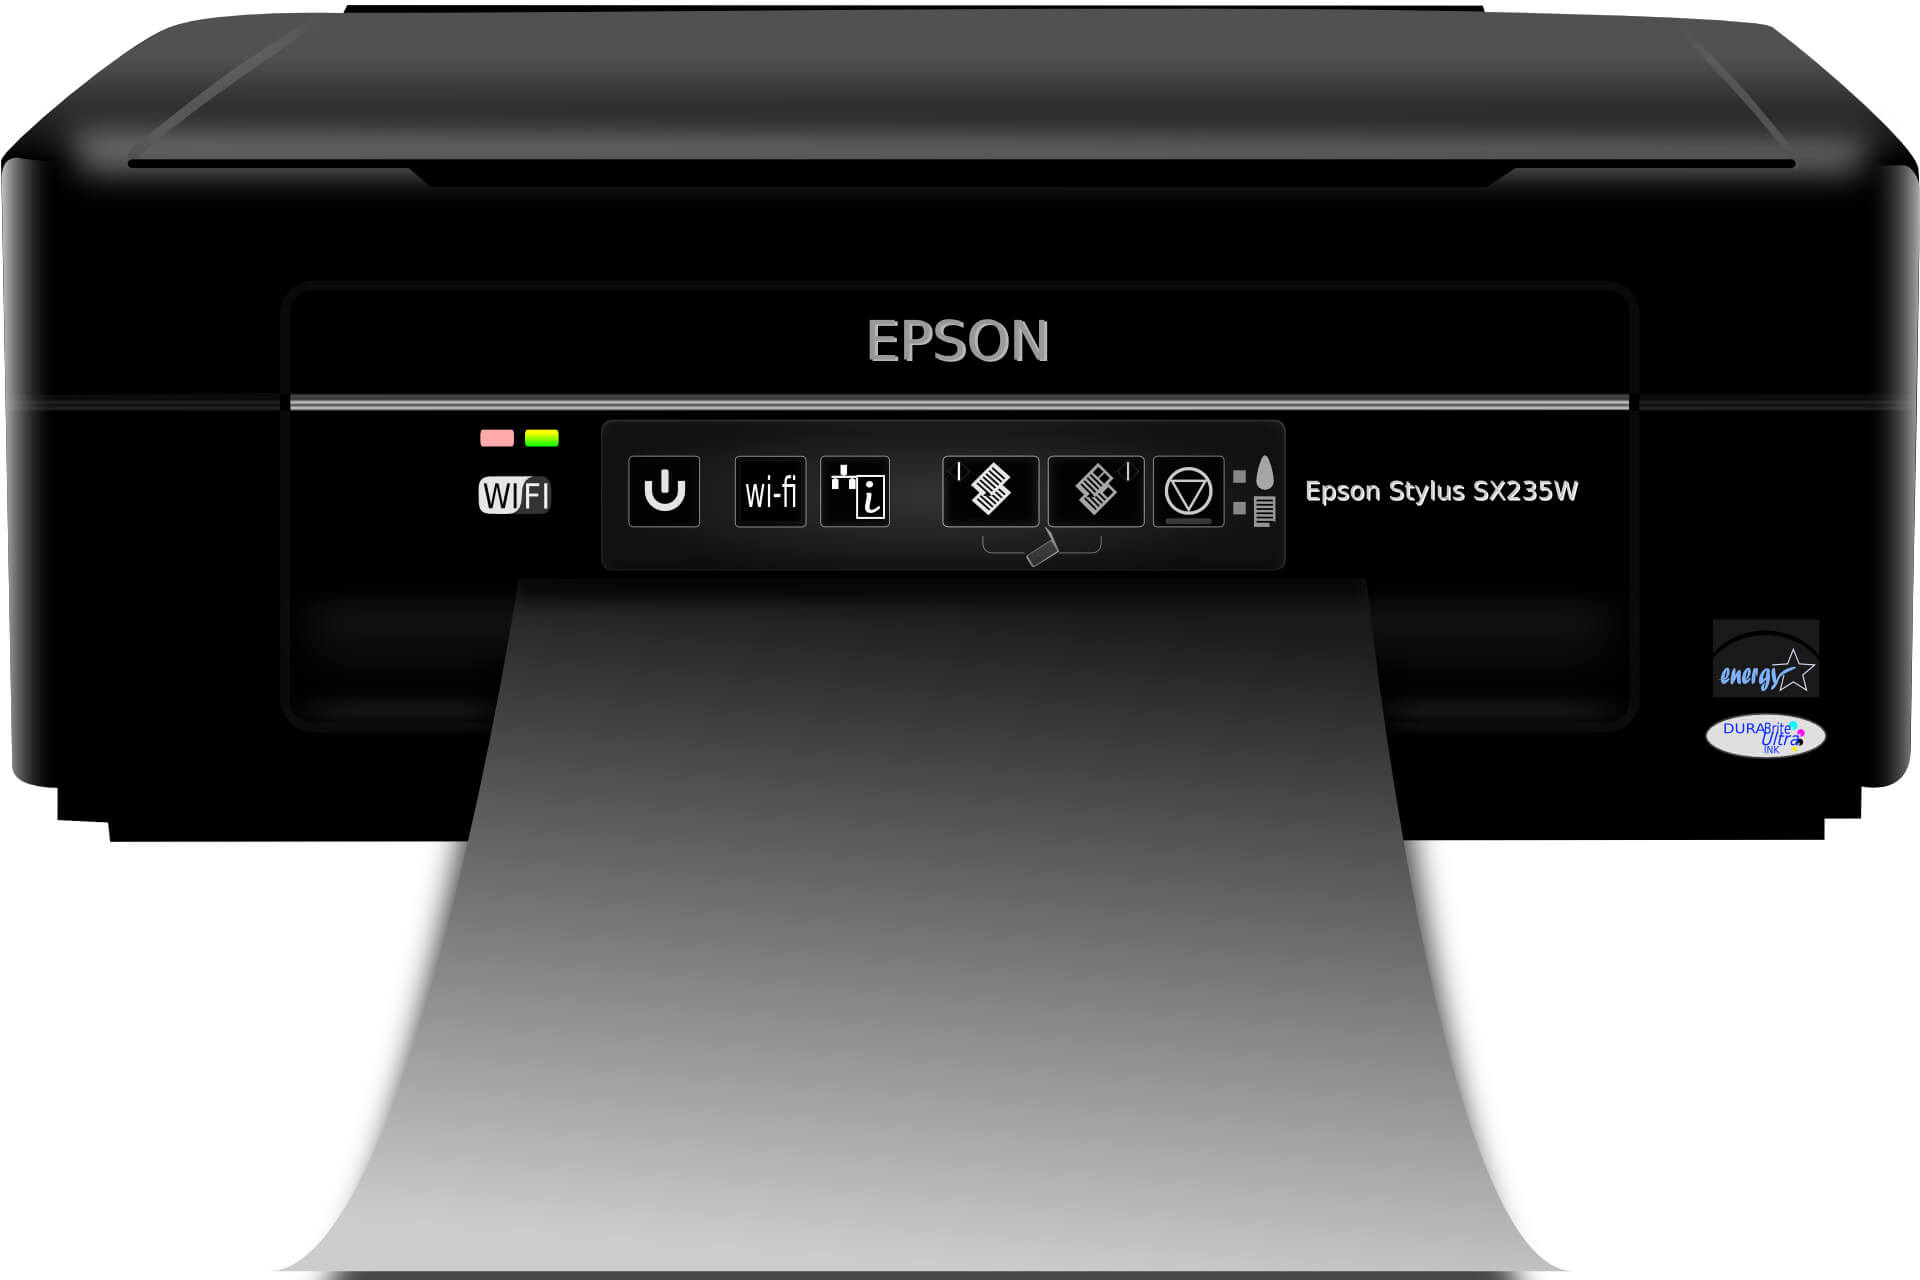 epson com download software